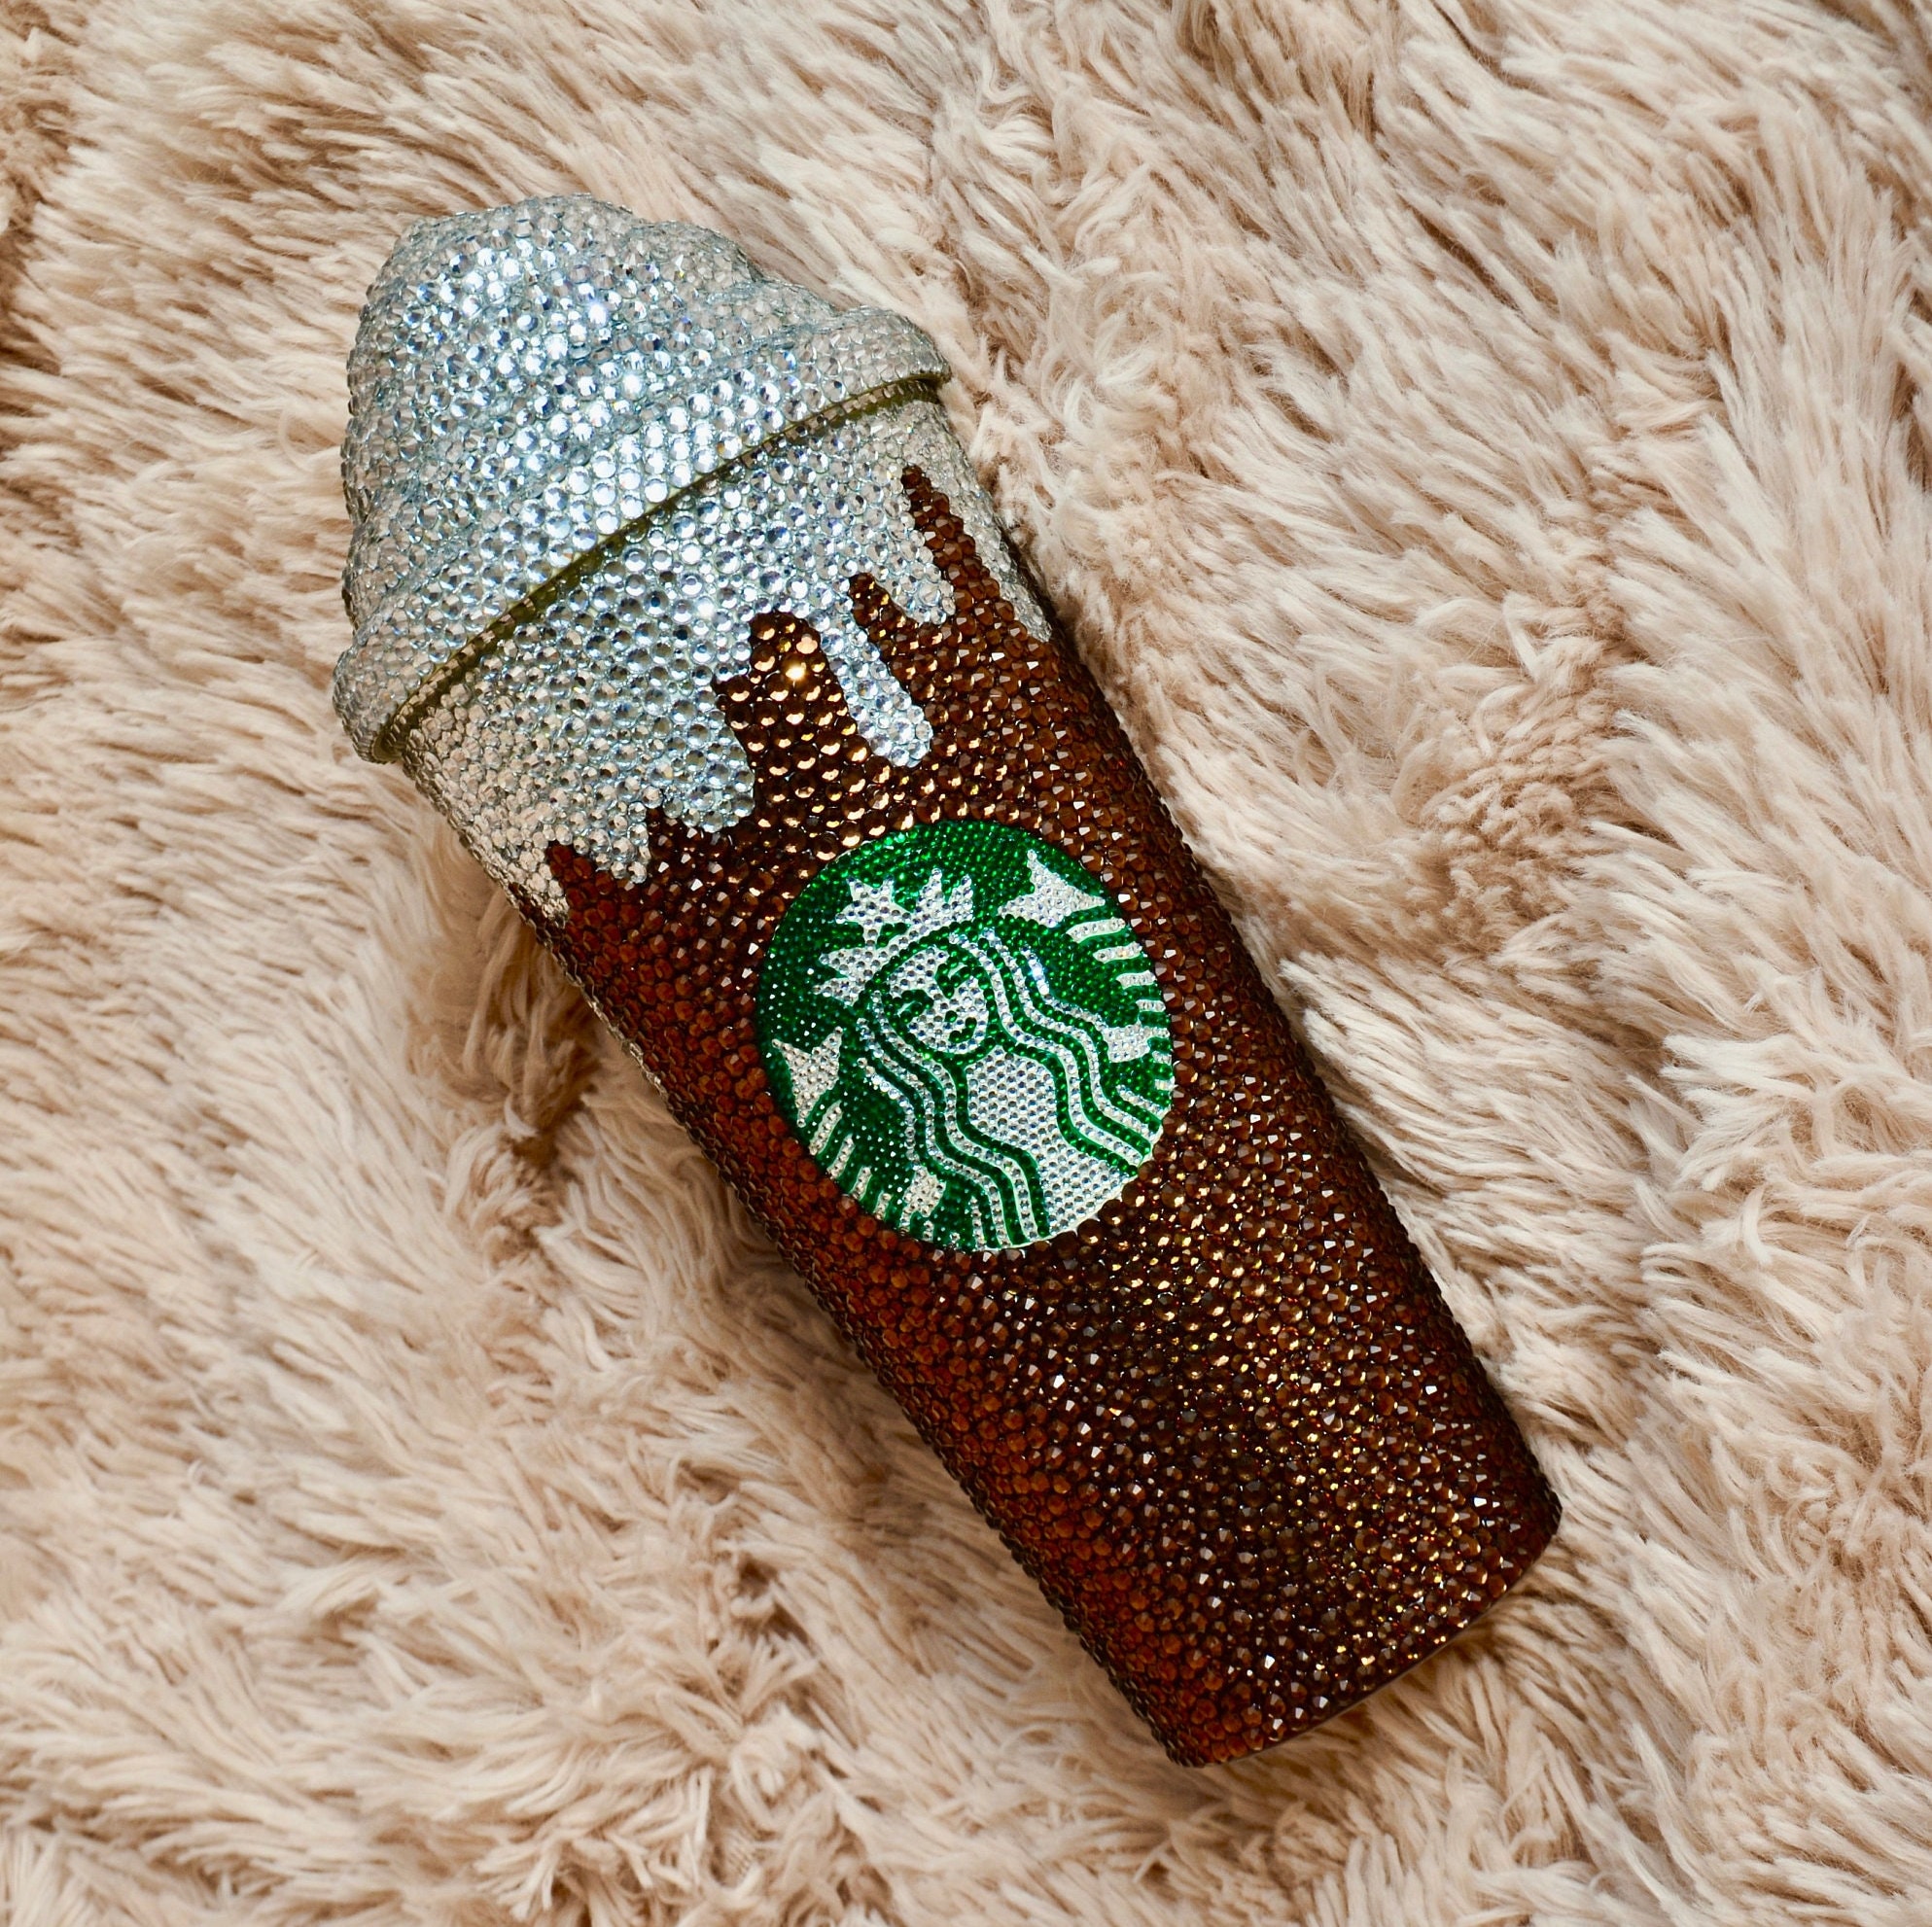 Starbucks Fashion Customized Cup with Rhinestones – Pink Fashion Nyc